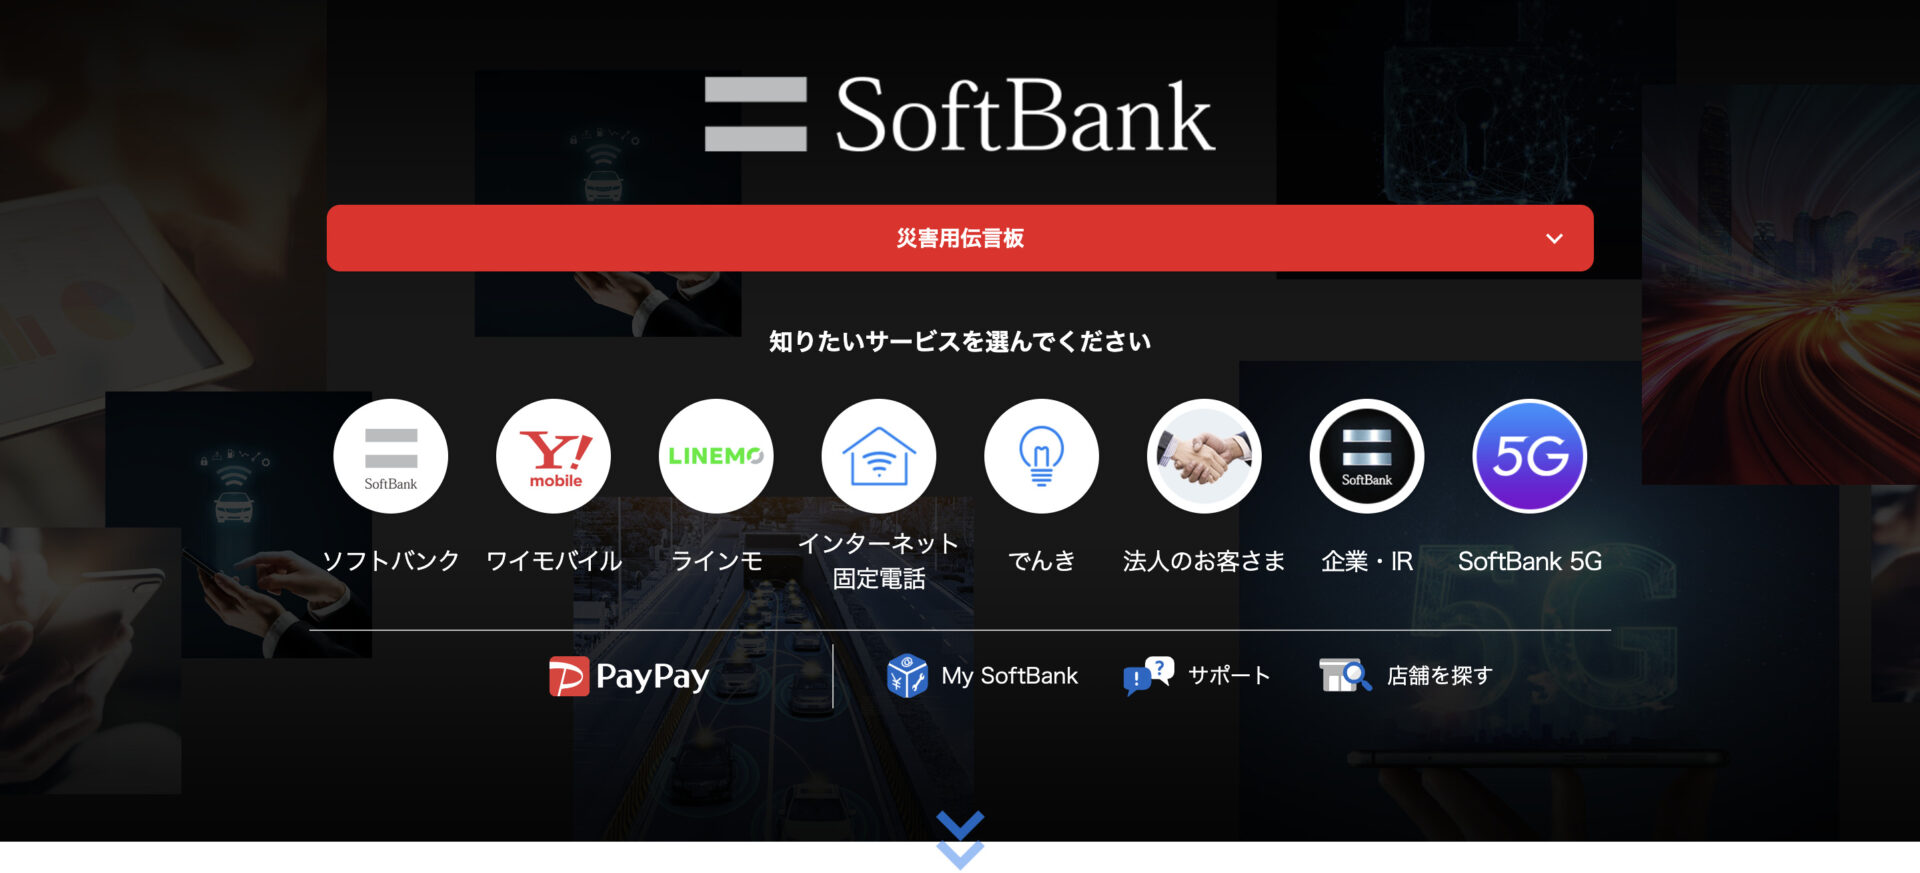 “SoftBankのホームページ”